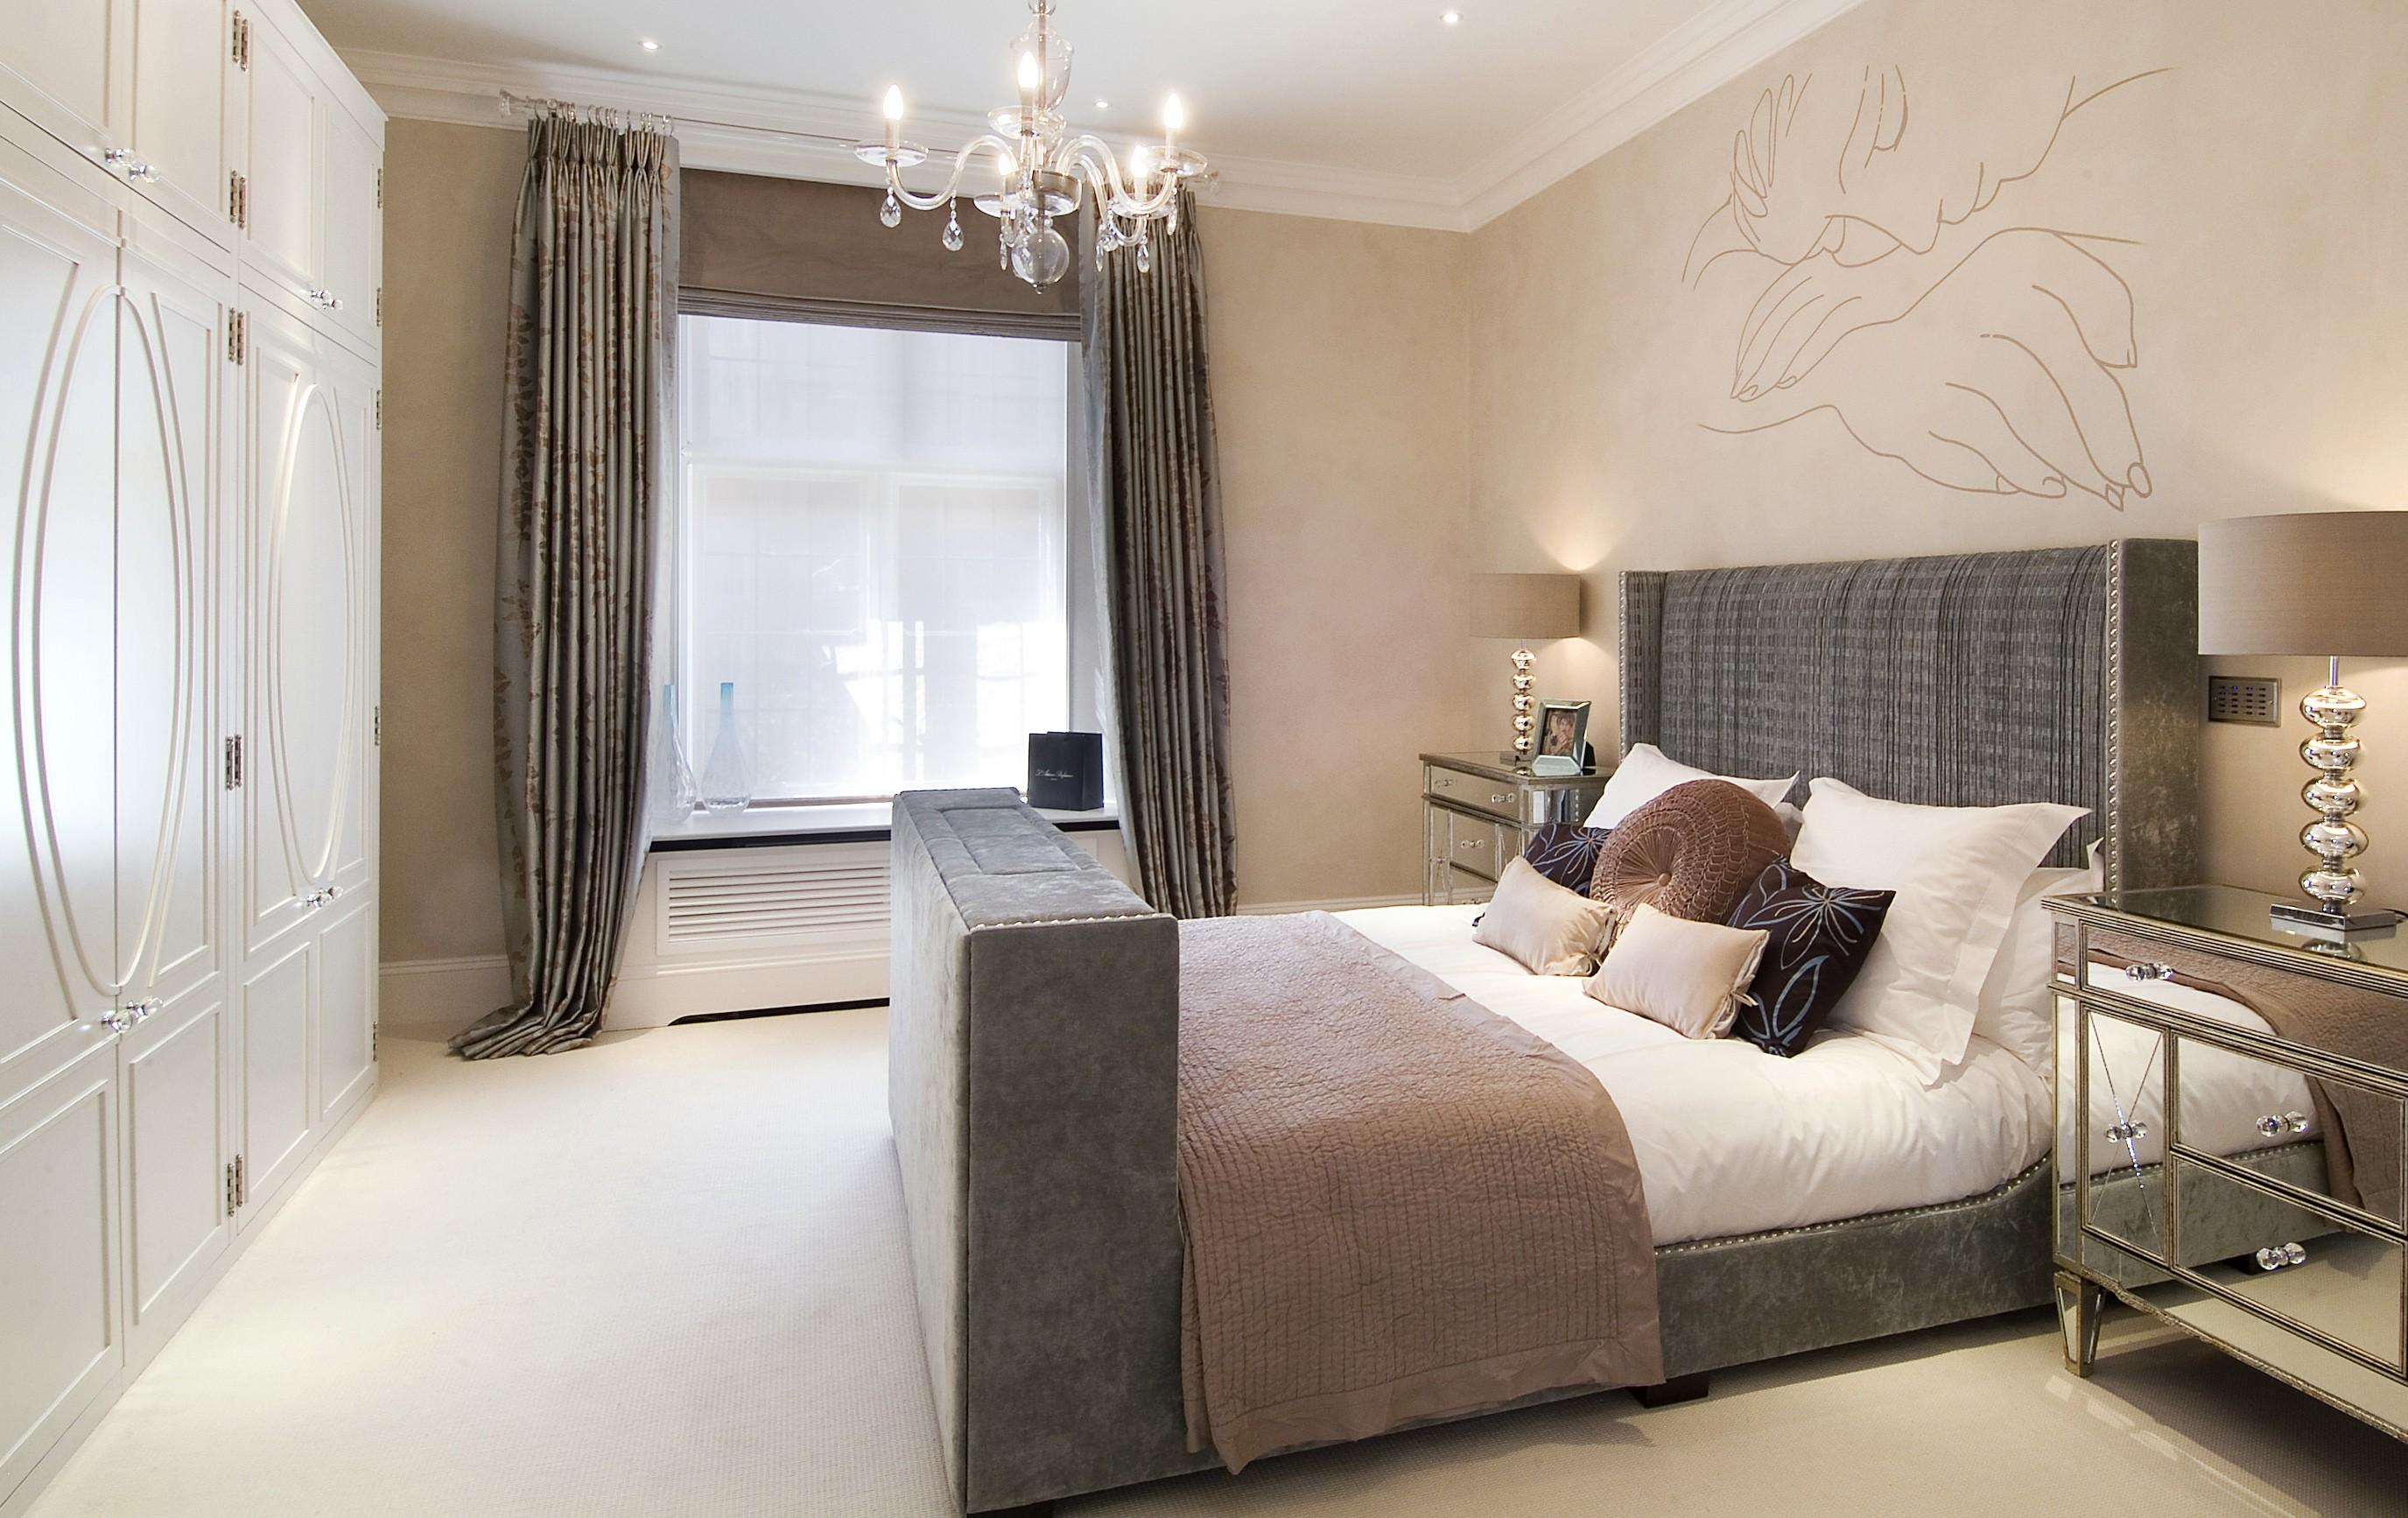 17 Exceptional Bedroom Designs With Beige Walls